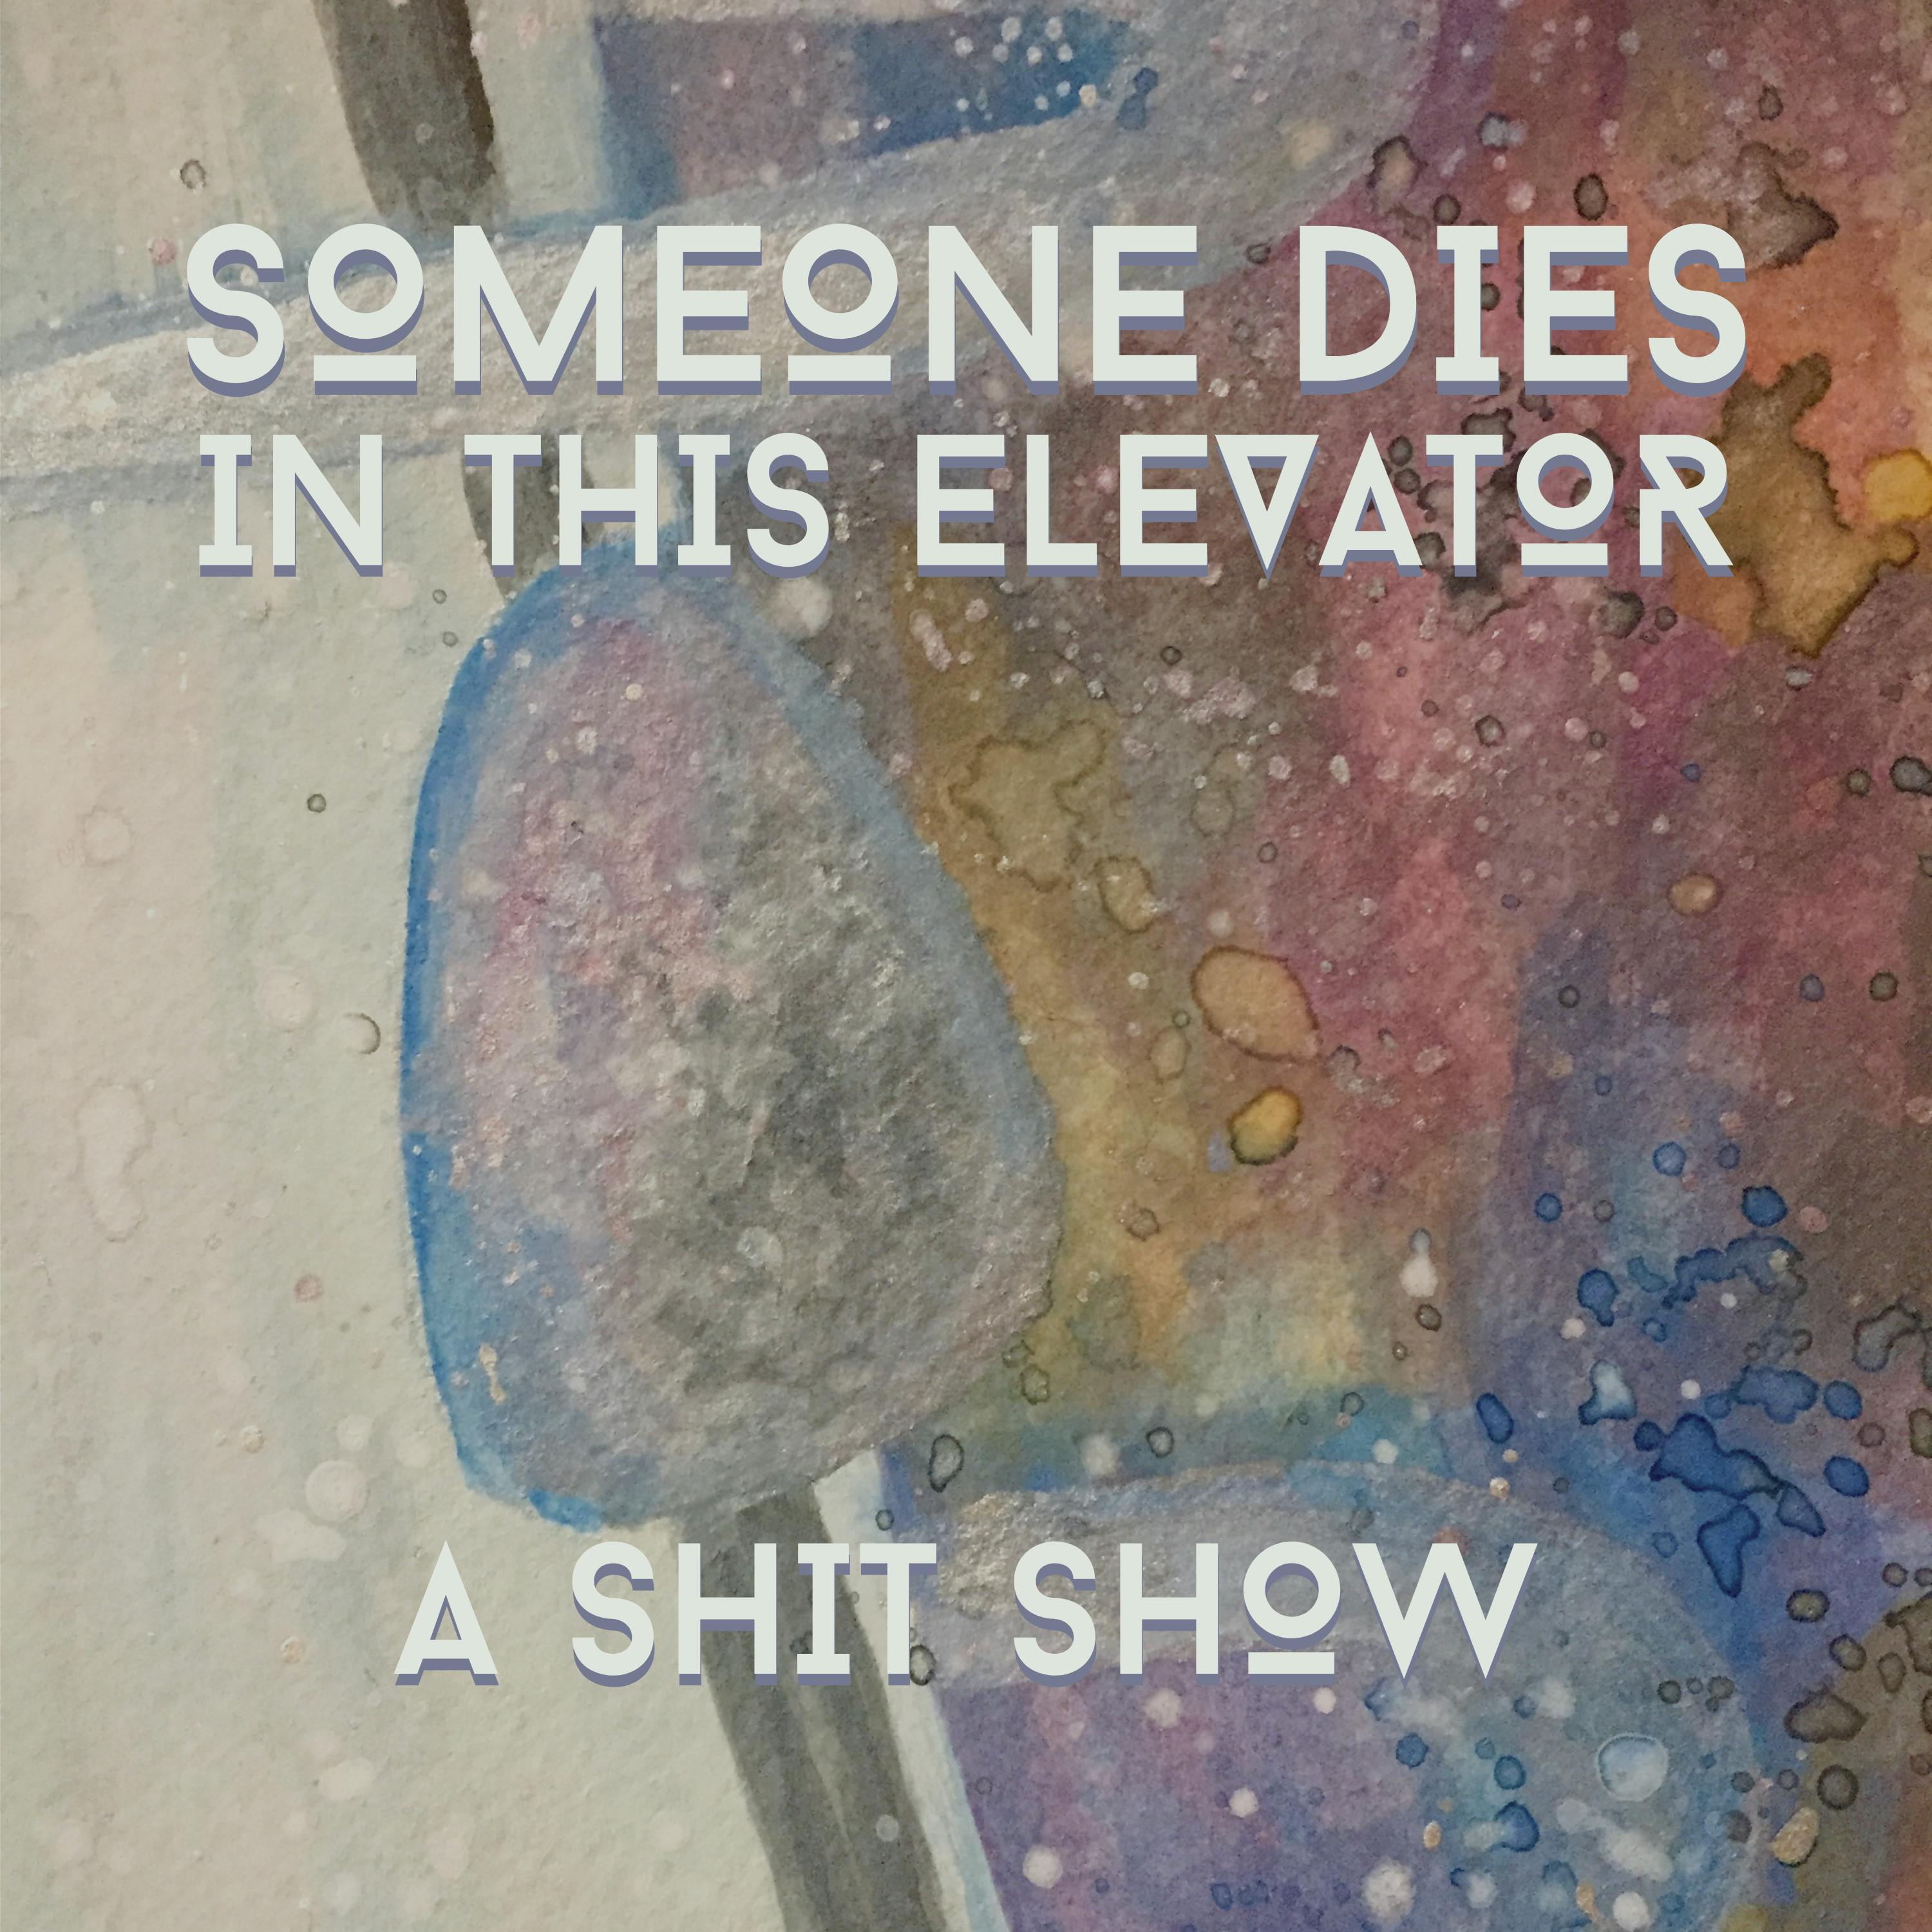 A Shit Show